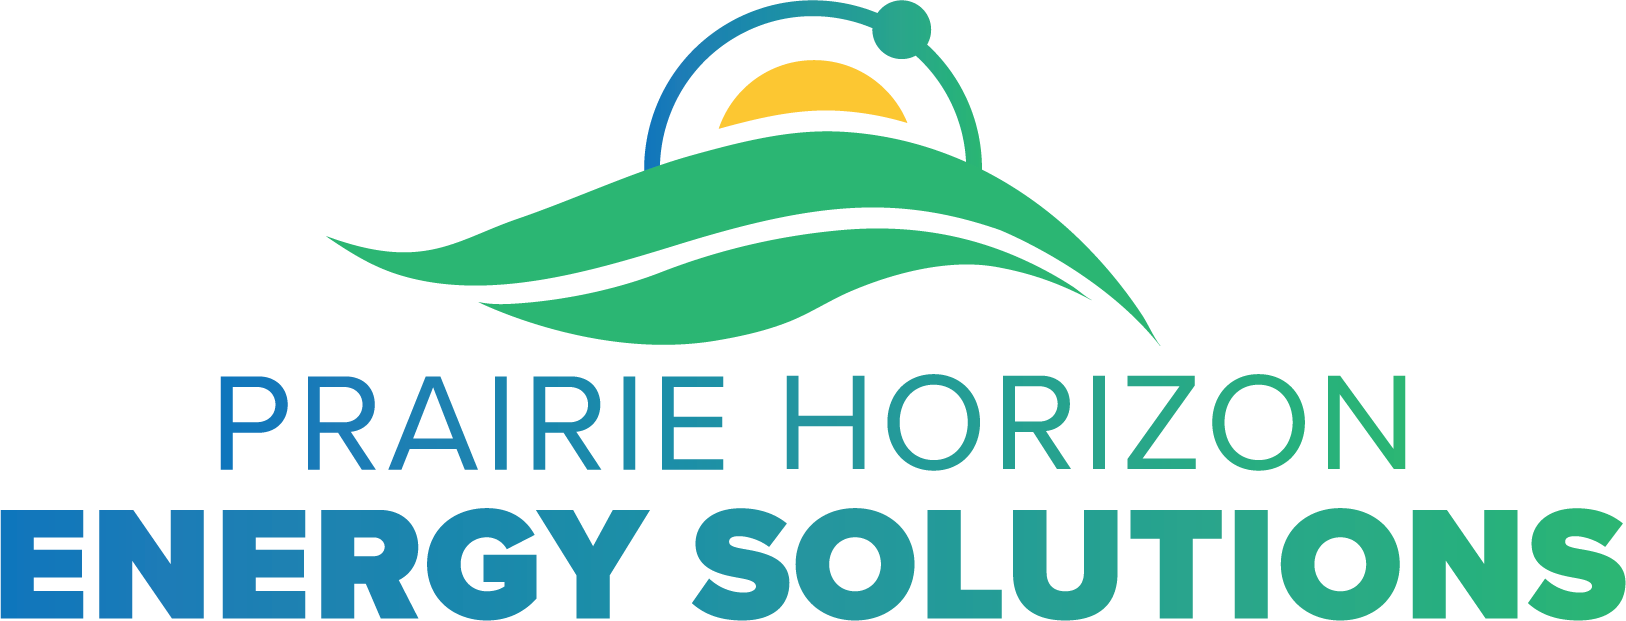 prairie-horizon-hydrogenlogo-600x336.png